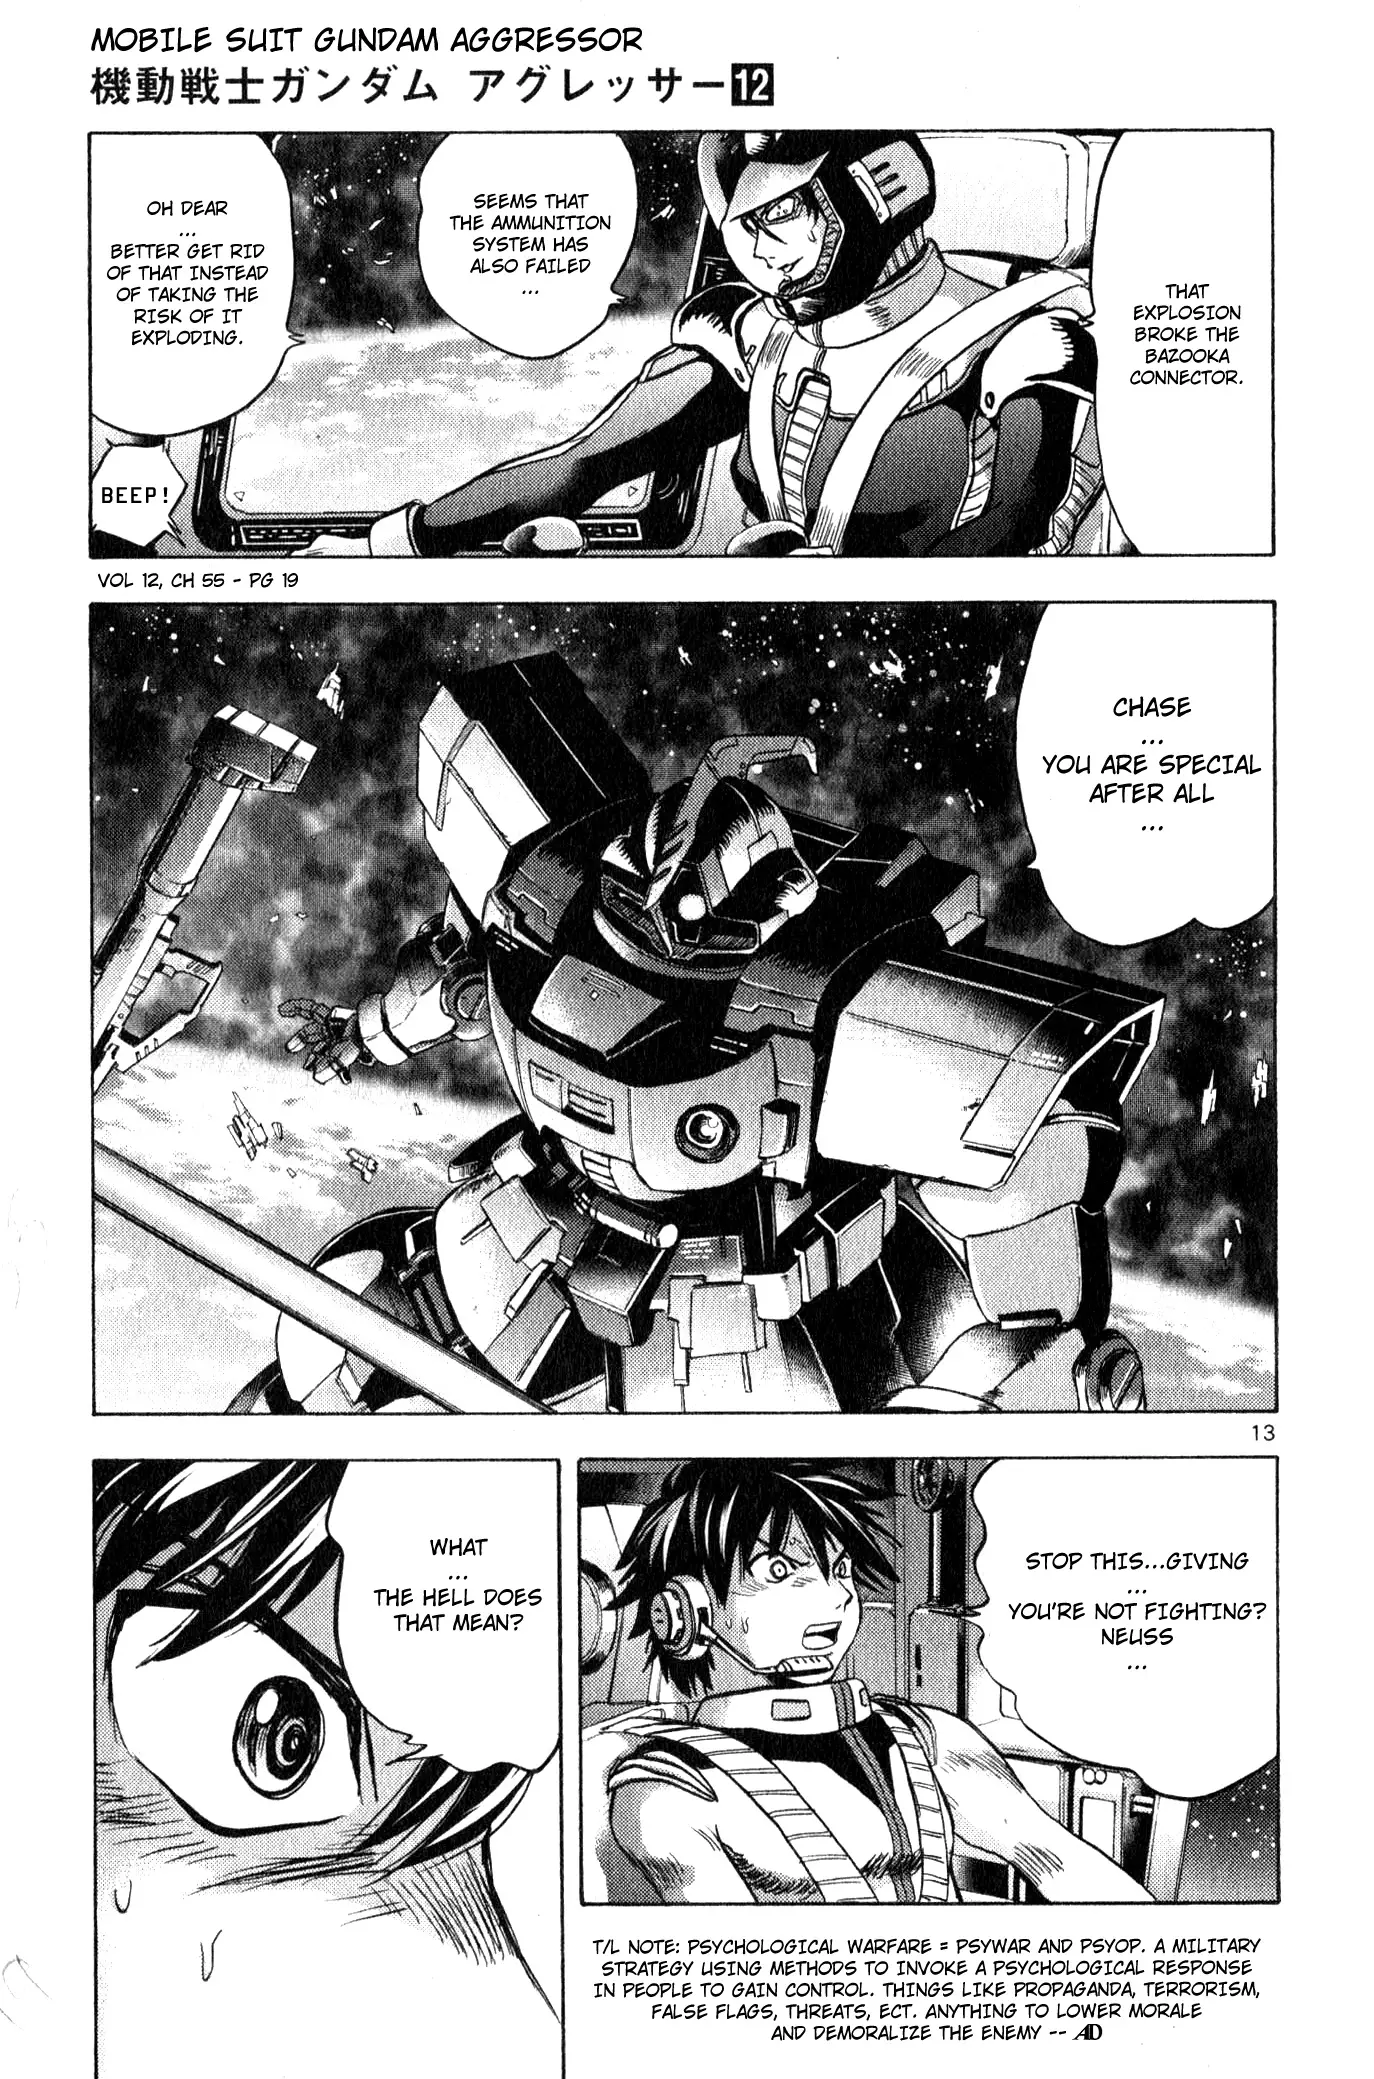 Mobile Suit Gundam Aggressor - 55 page 13-34e3fd67